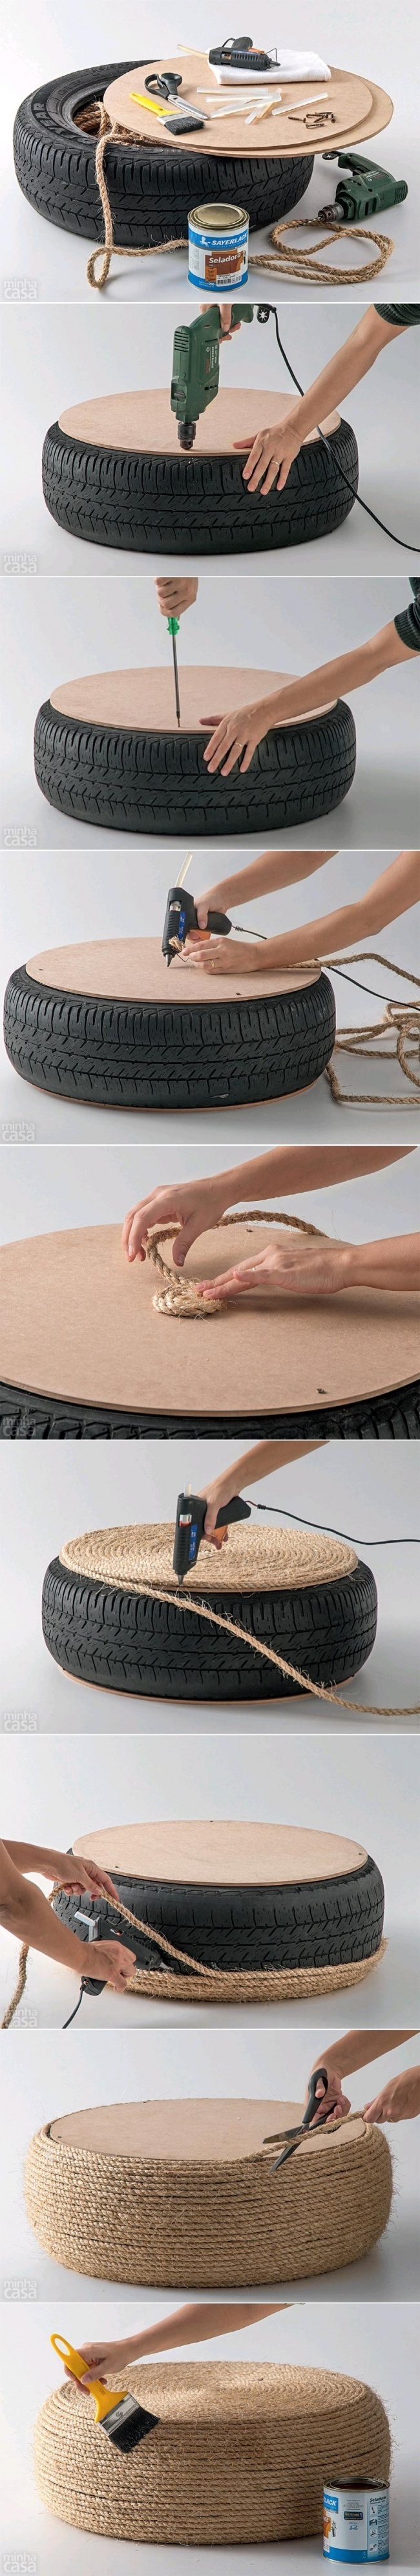 DIY-Tire-Ottoman